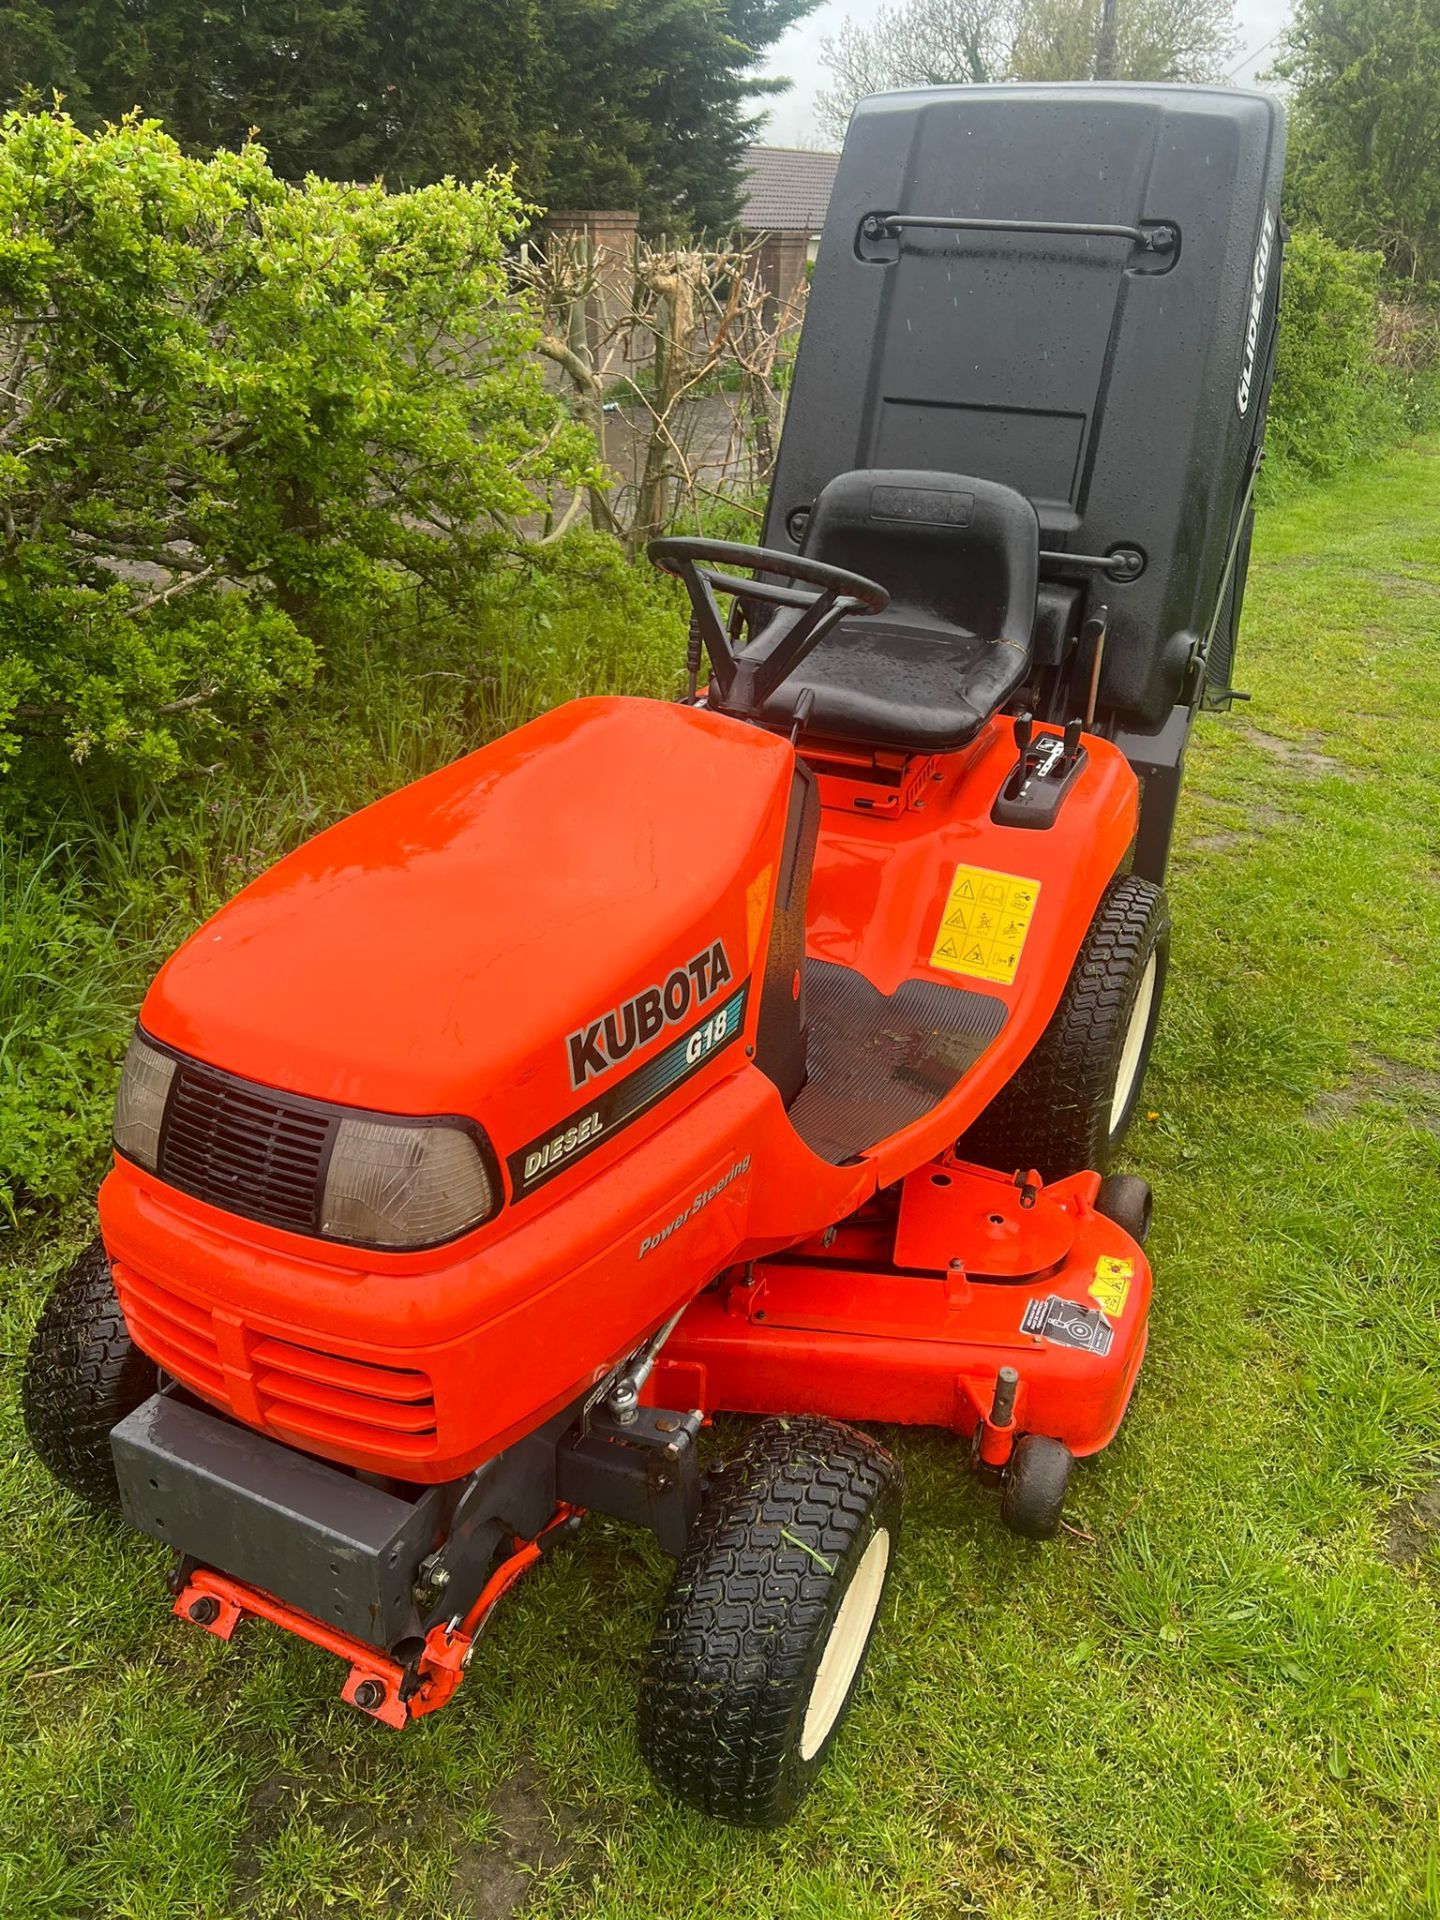 Kubota g18 ride on lawn mower (mint condition) *PLUS VAT* - Image 7 of 26